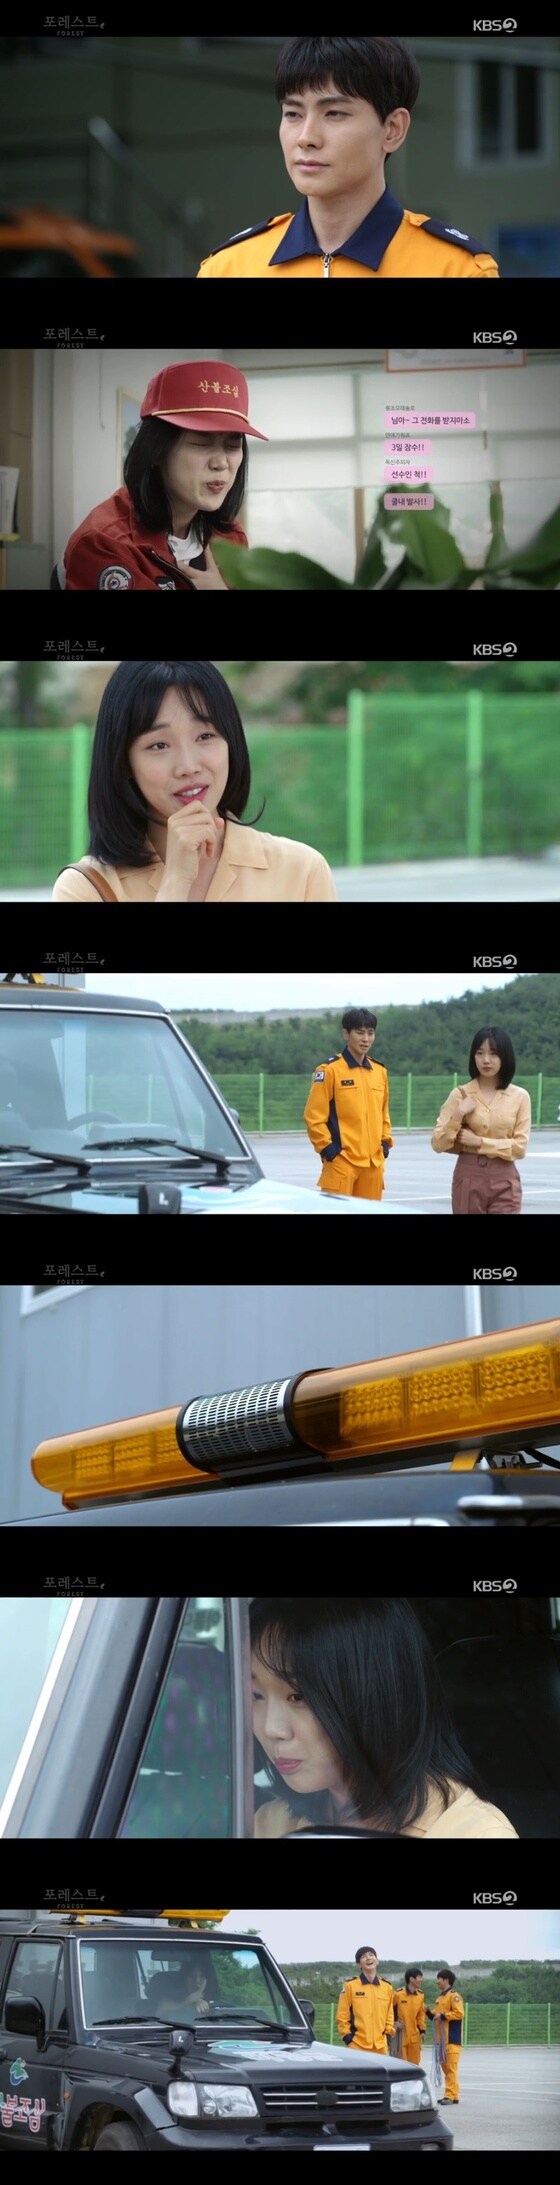 KBS 2TV '포레스트' 캡처 © 뉴스1